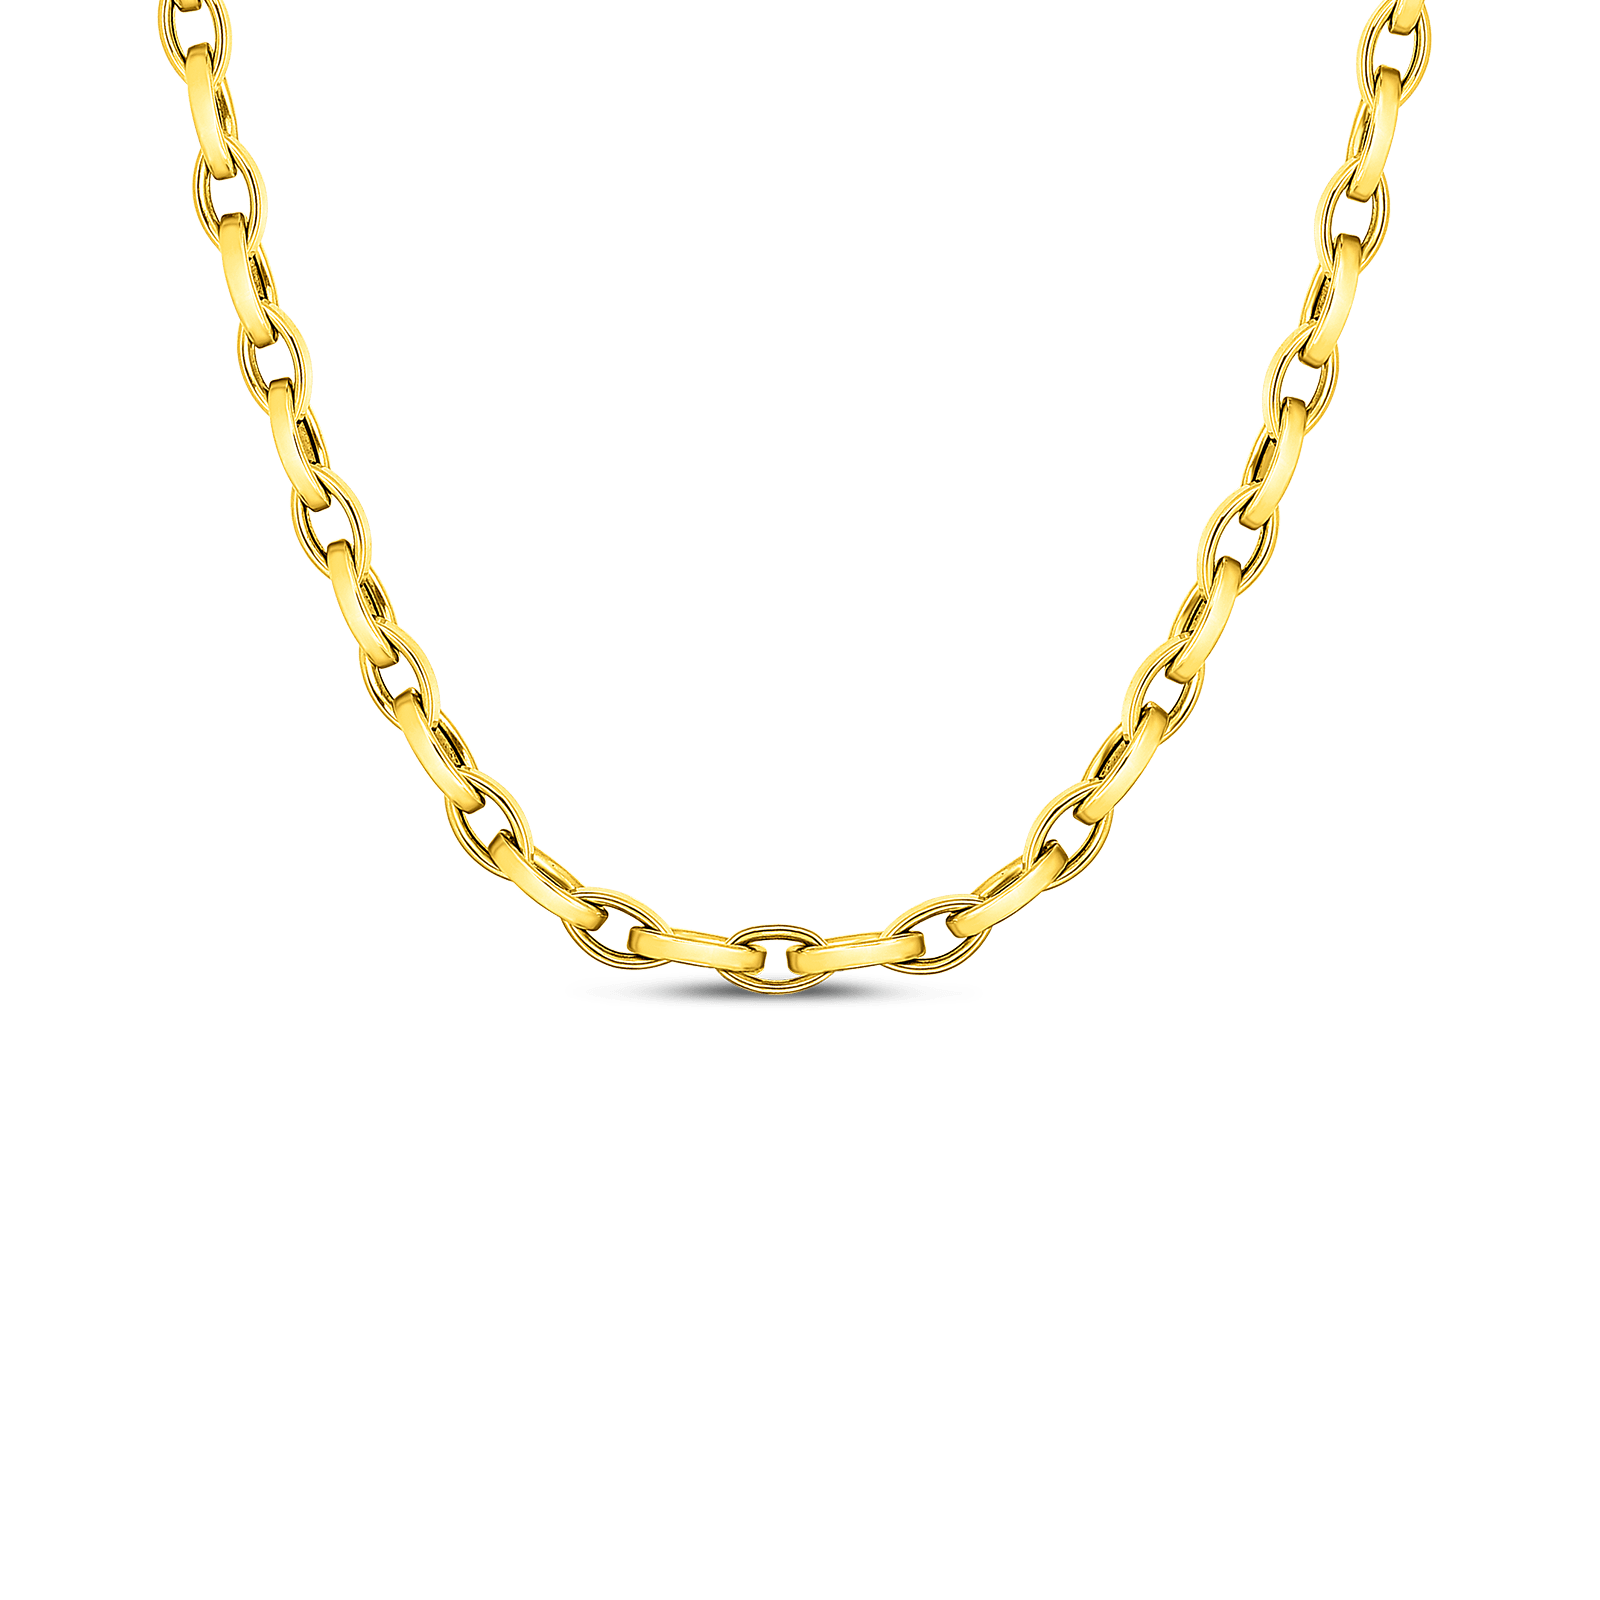 Roberto Coin 18KY Designer Gold Almond Link Chain | 22